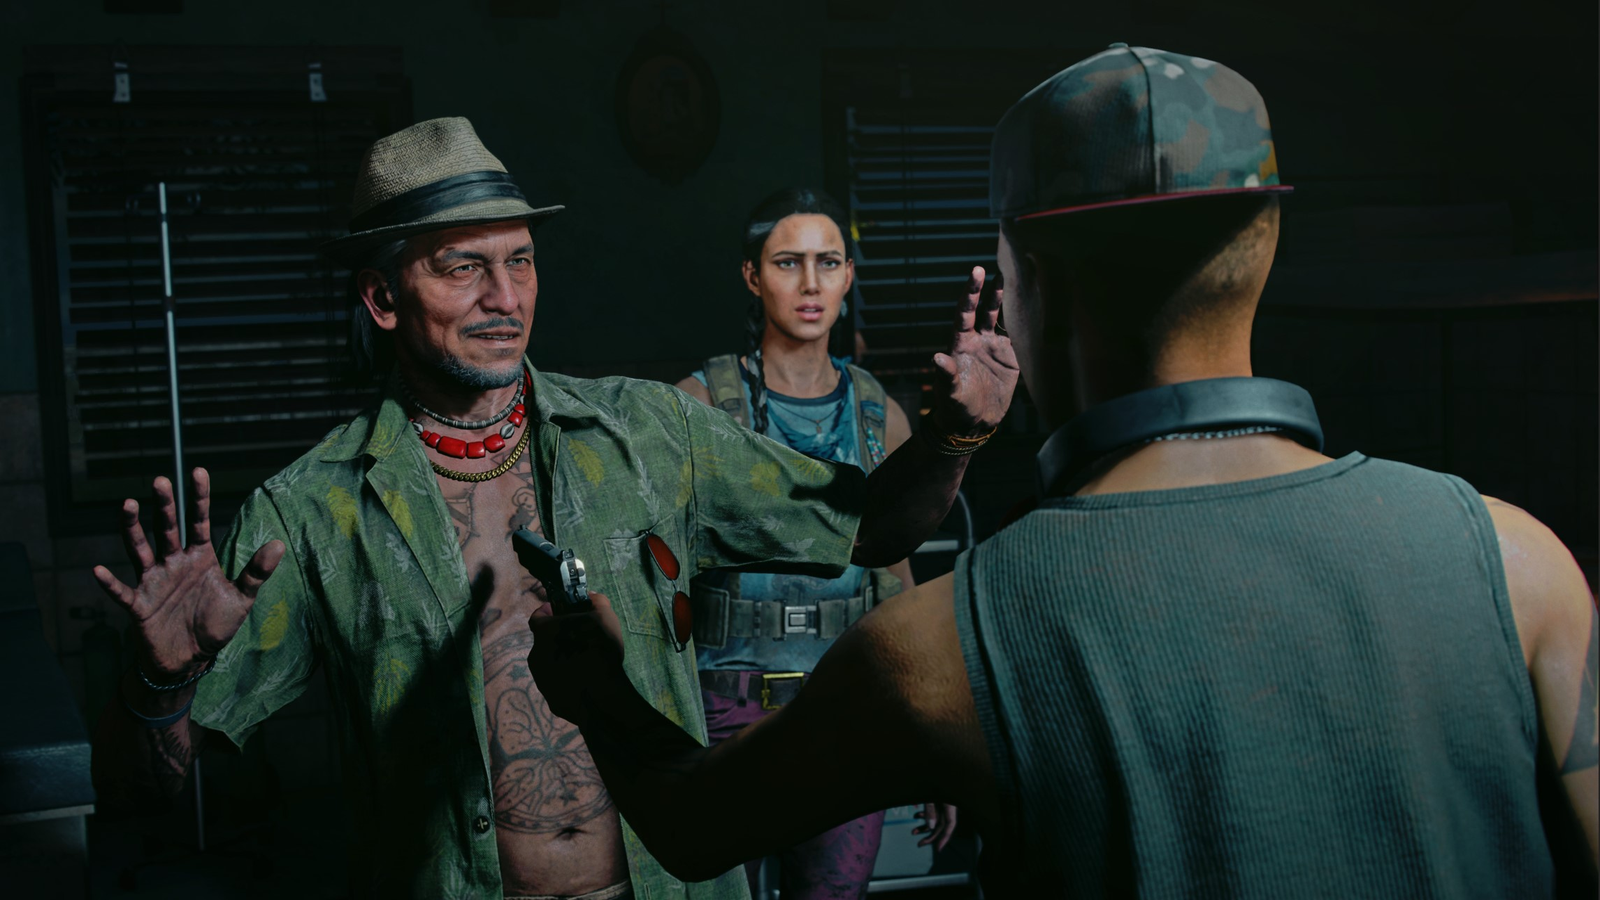 Save 60% on Far Cry® 6 Season Pass on Steam